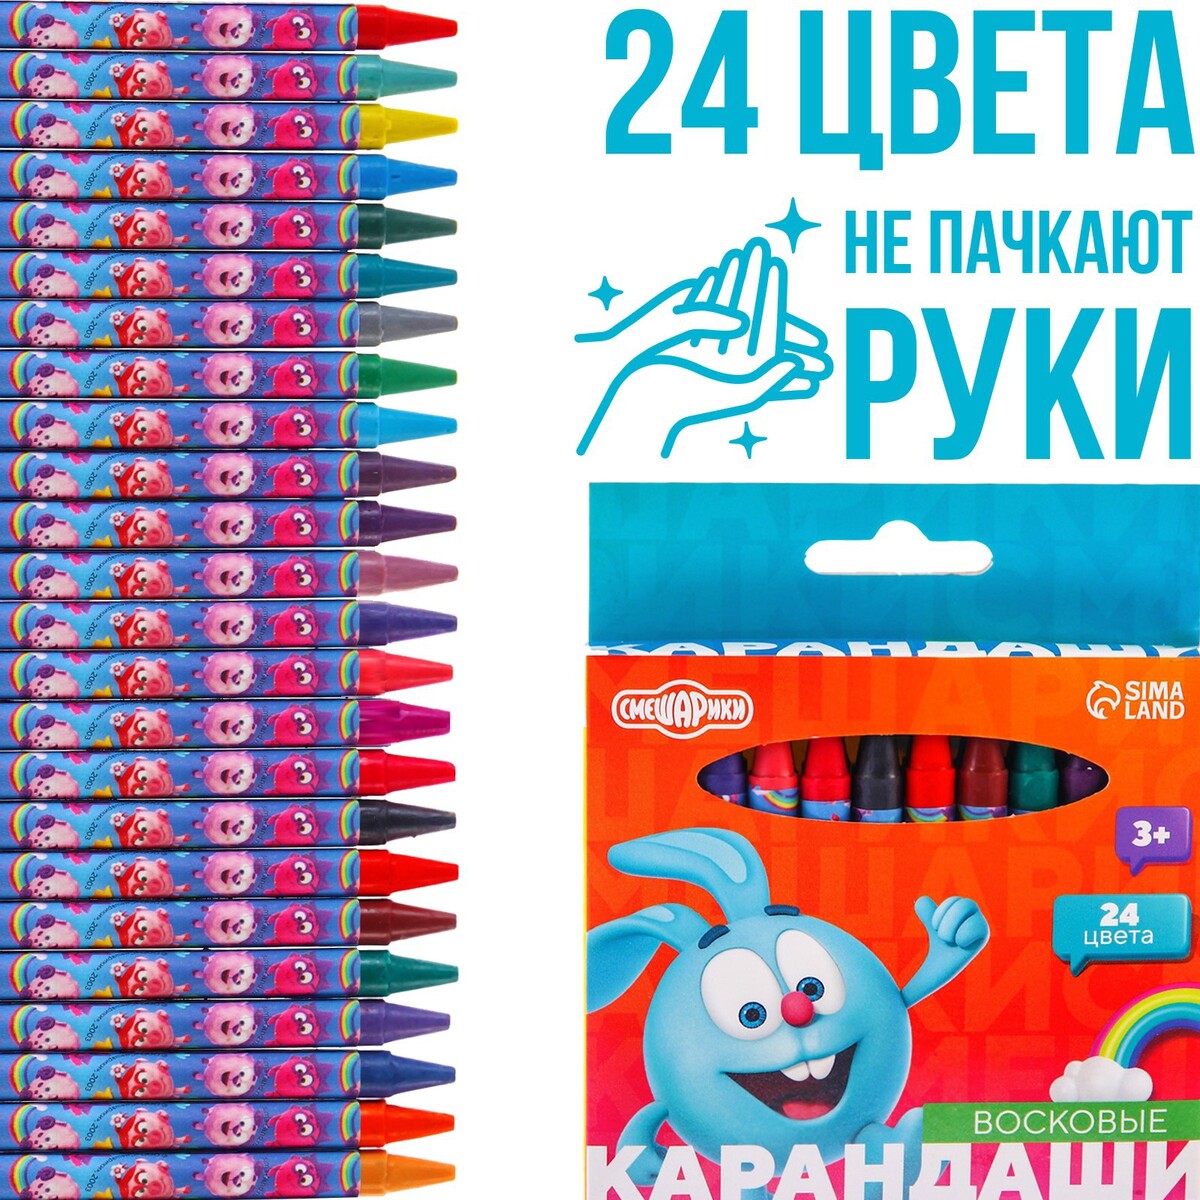 Восковые карандаши, набор 24 цвета, смешарики набор игровой ракетки 8×12 см и два мячика смешарики